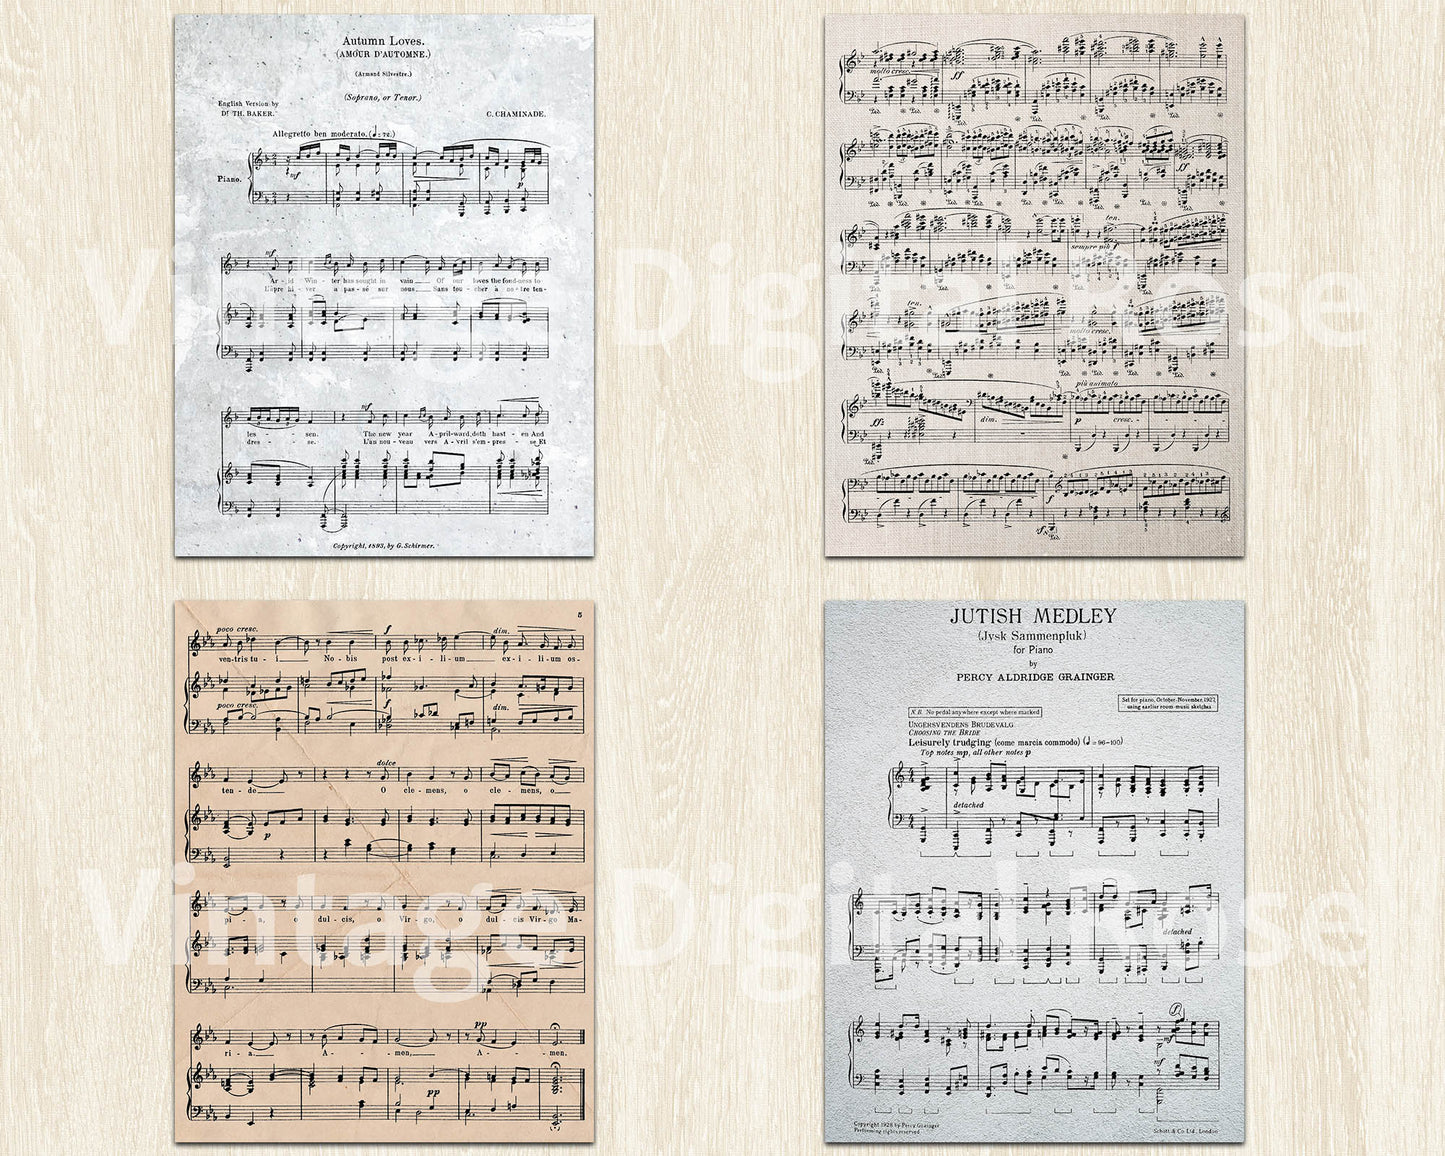 Vintage Sheet Music Overlays - 10 8.5x11 Sheet Music PNG Overlays